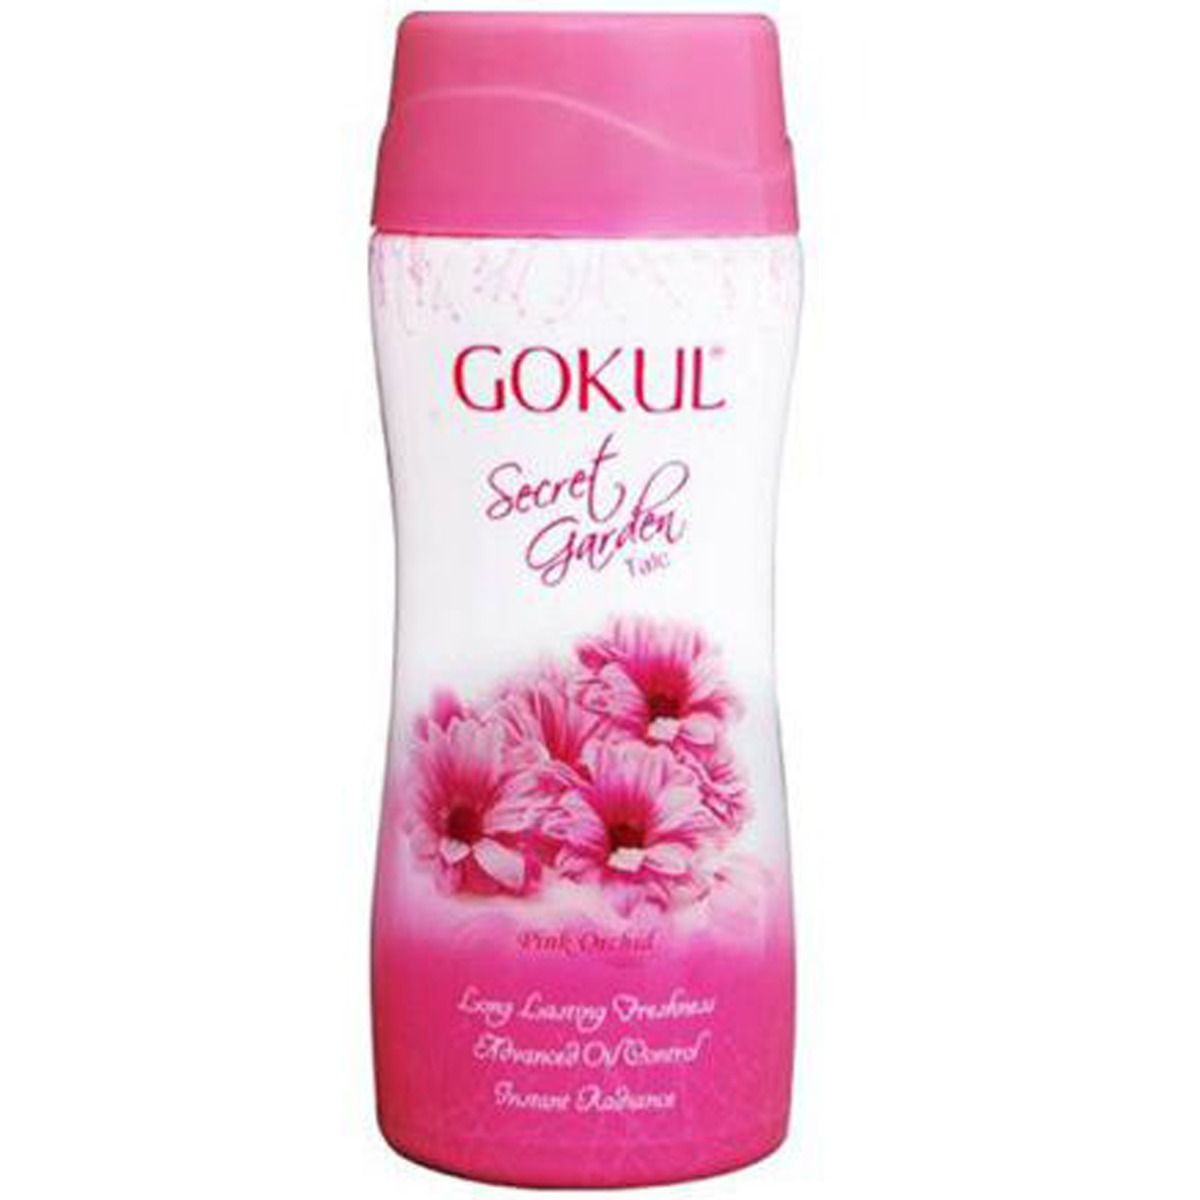 Buy Gokul Secret Garden Talcum Powder, 100 gm Online